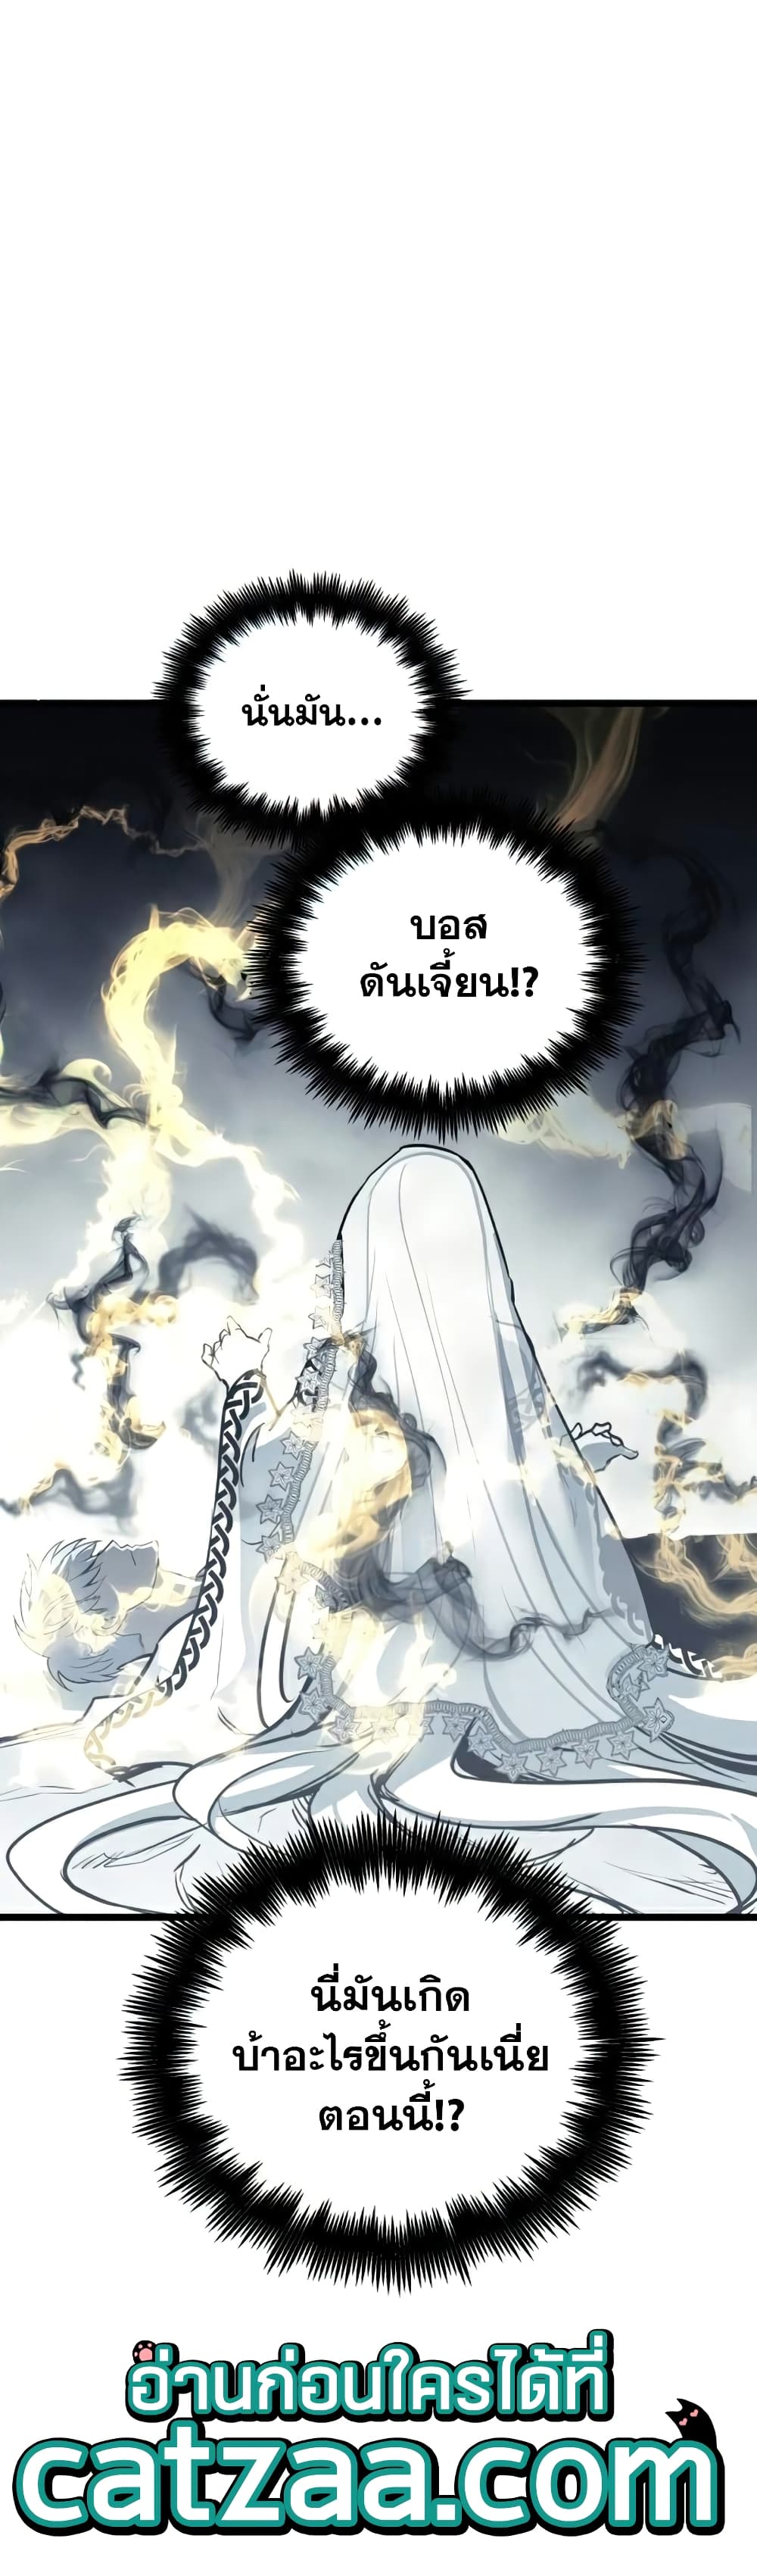 Reincarnation of the Suicidal Battle God 32 แปลไทย